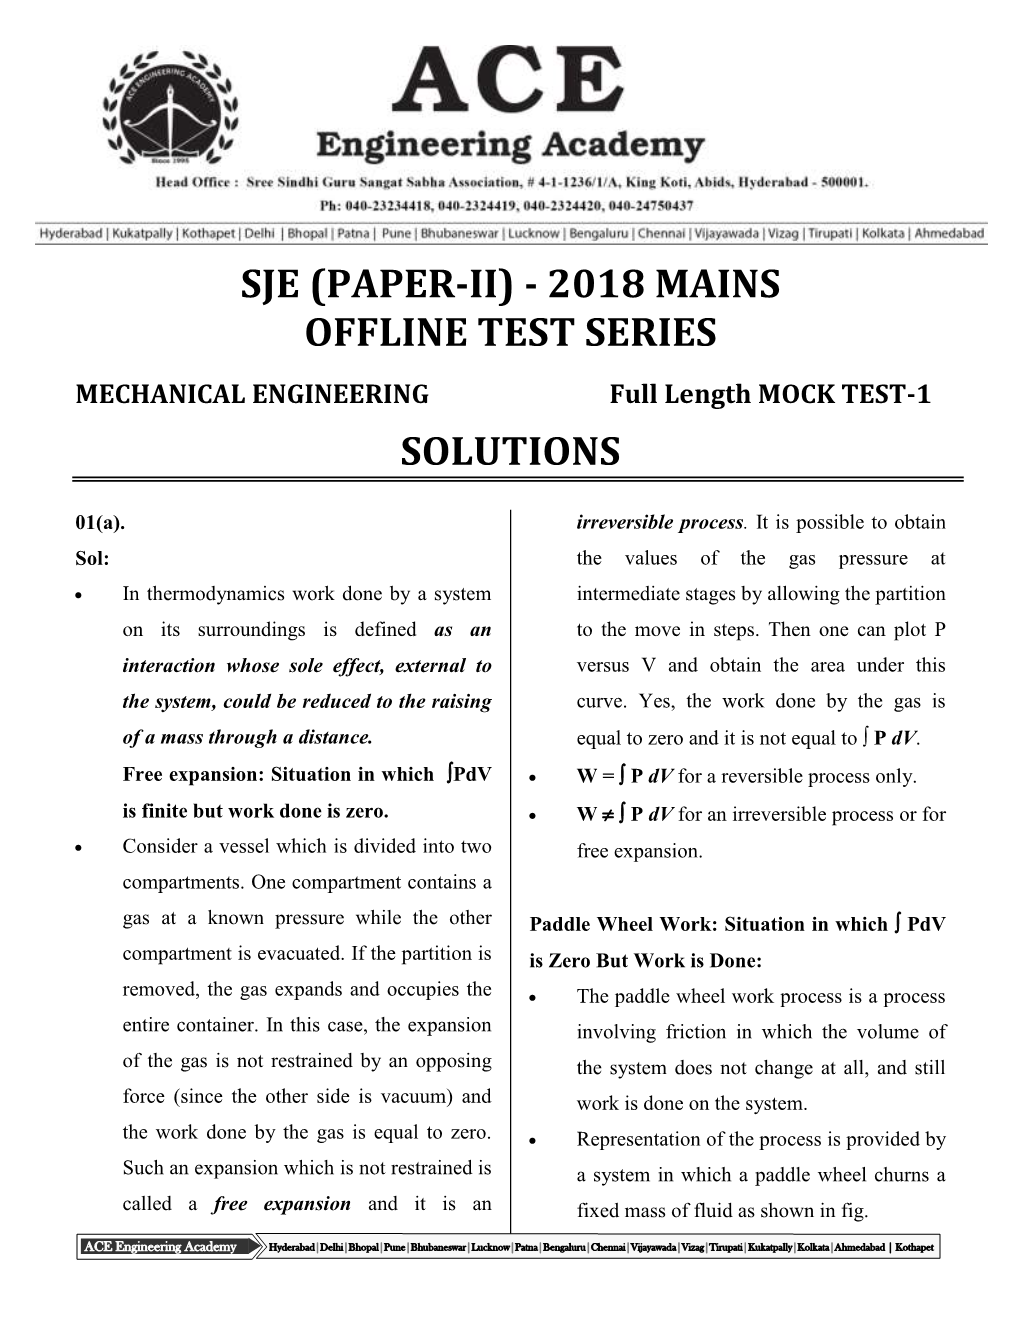 Sje (Paper-Ii) - 2018 Mains Offline Test Series